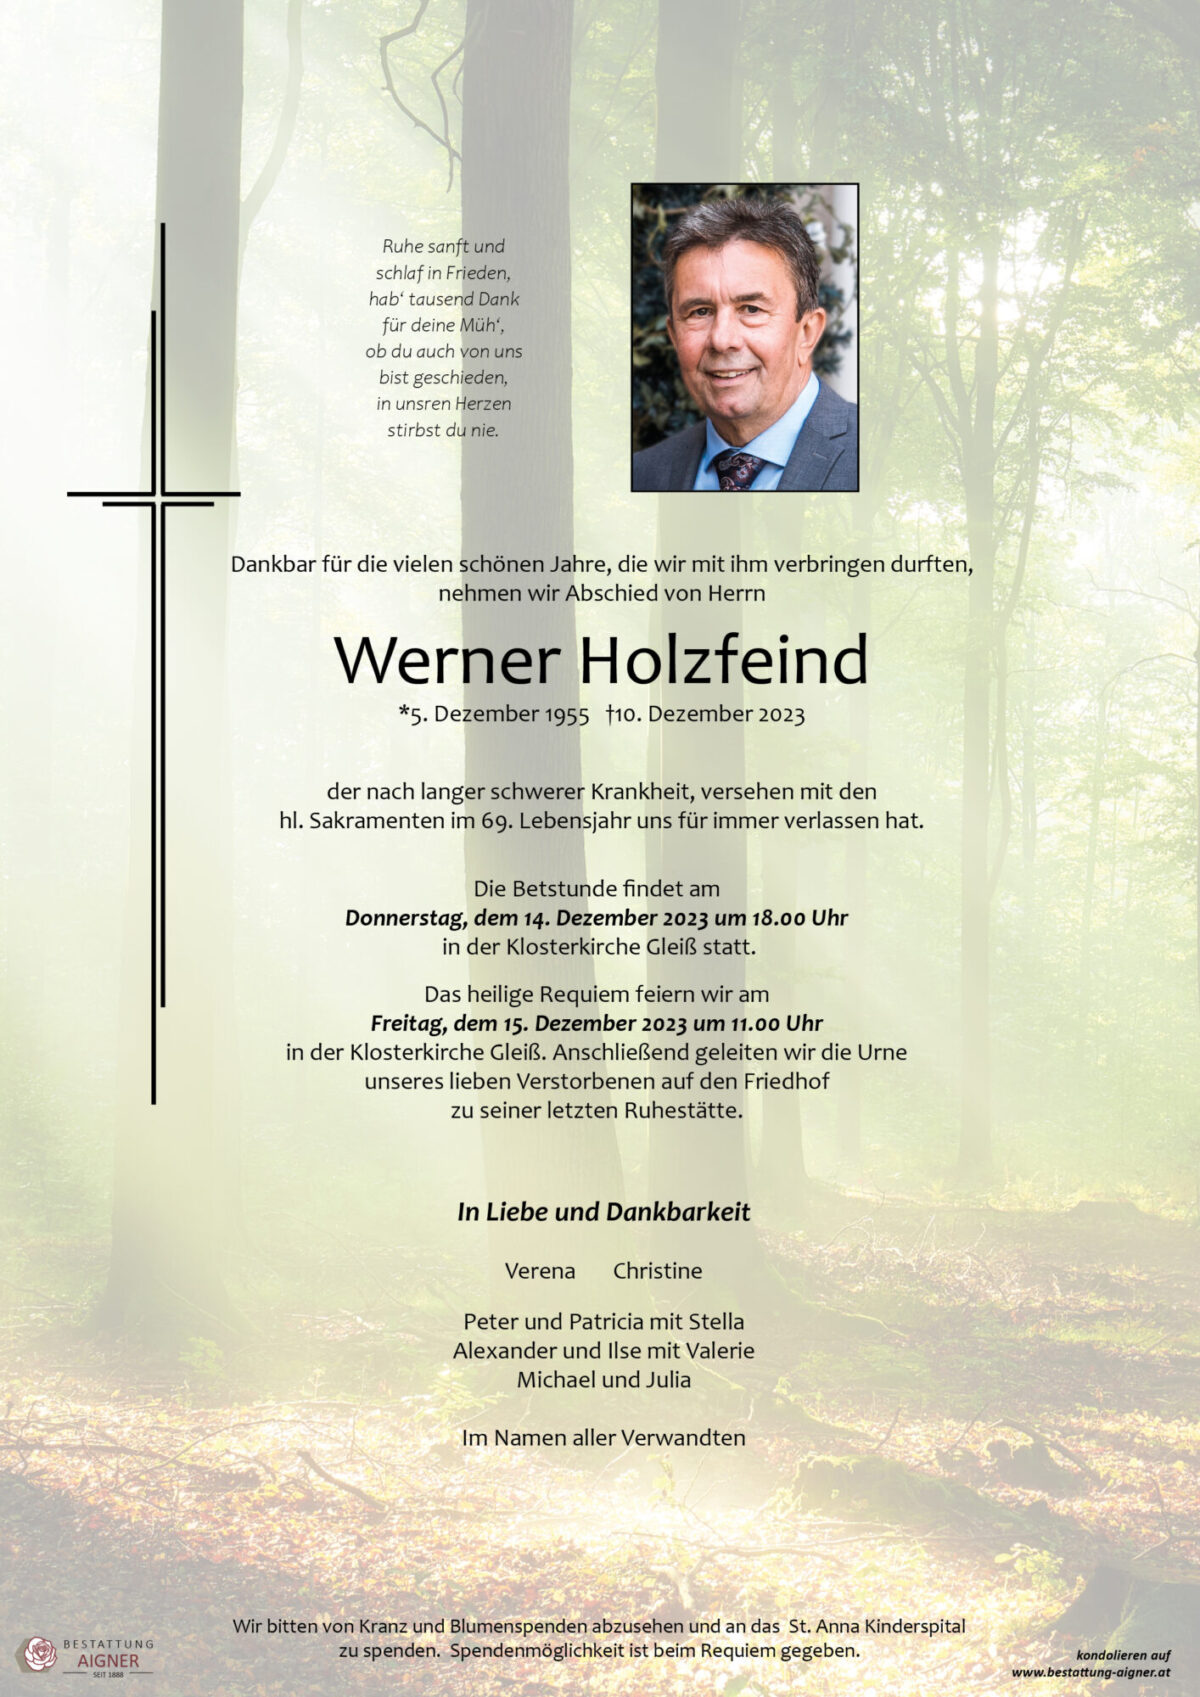 Werner Holzfeind